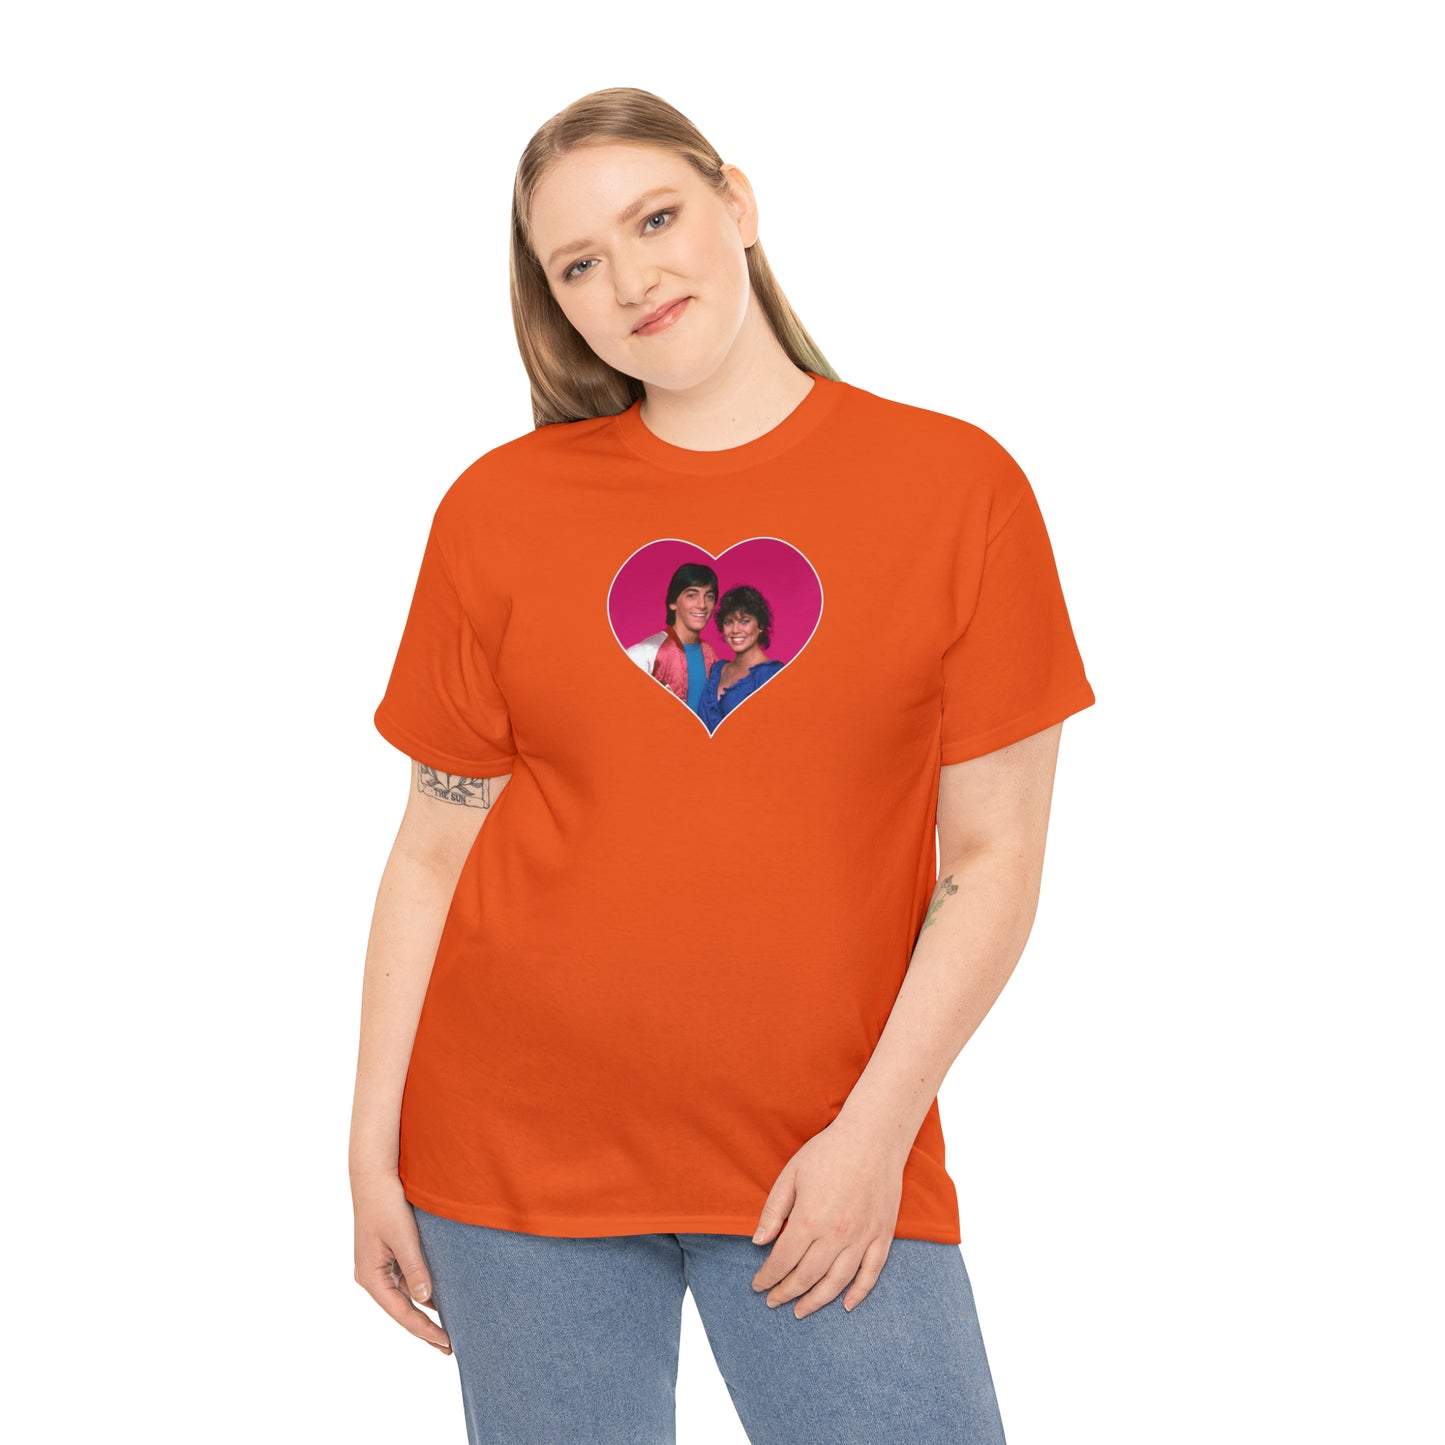 Joanie Loves Chachi T-Shirt